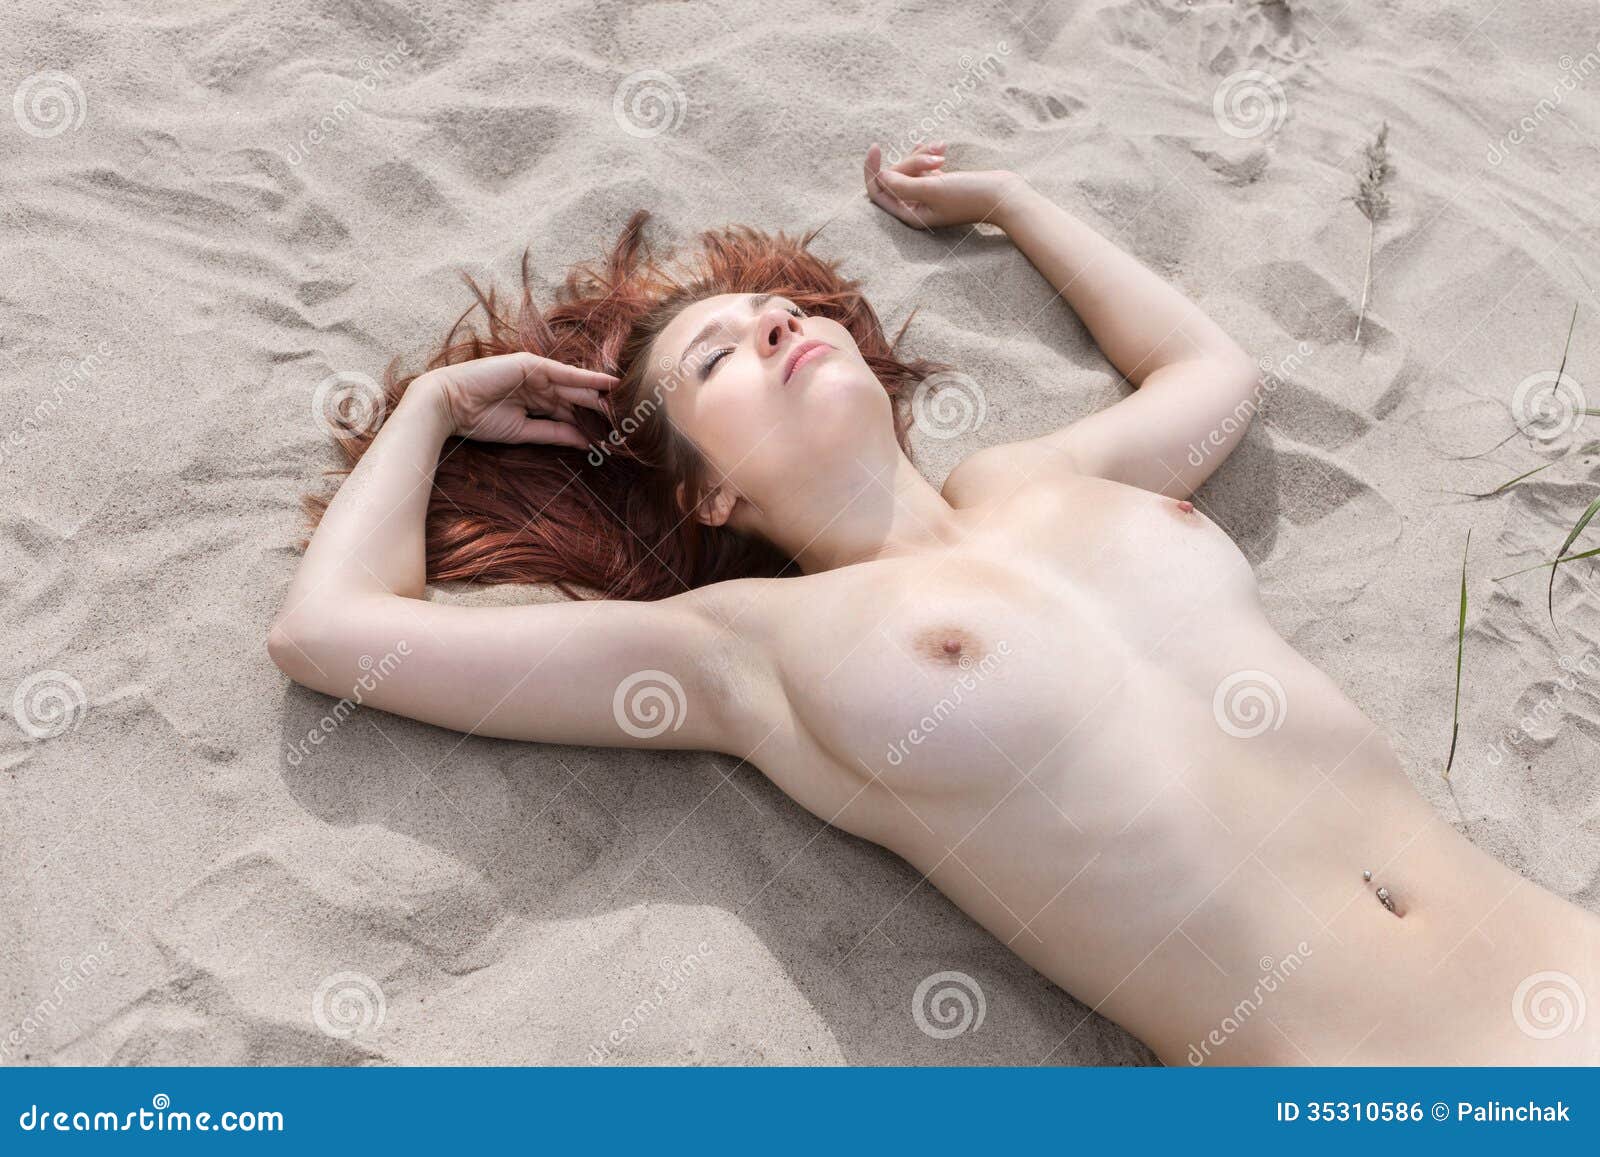 Women Laying Nude